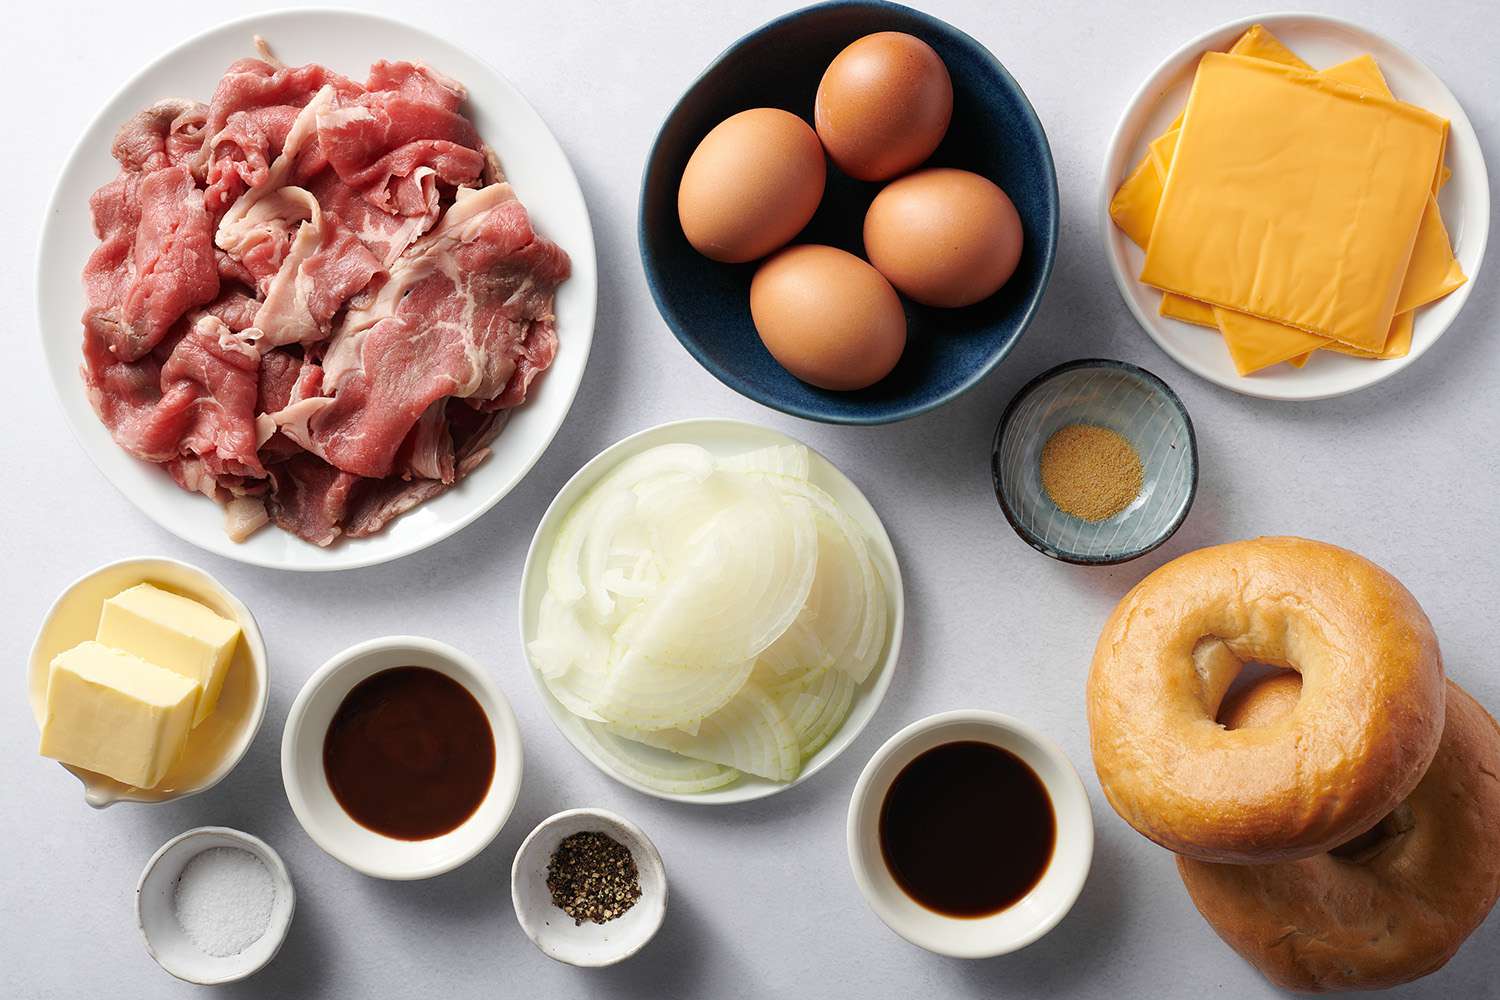 ingredients to make McDonald's Copycat Steak, Egg, and Cheese Bagel Recipe